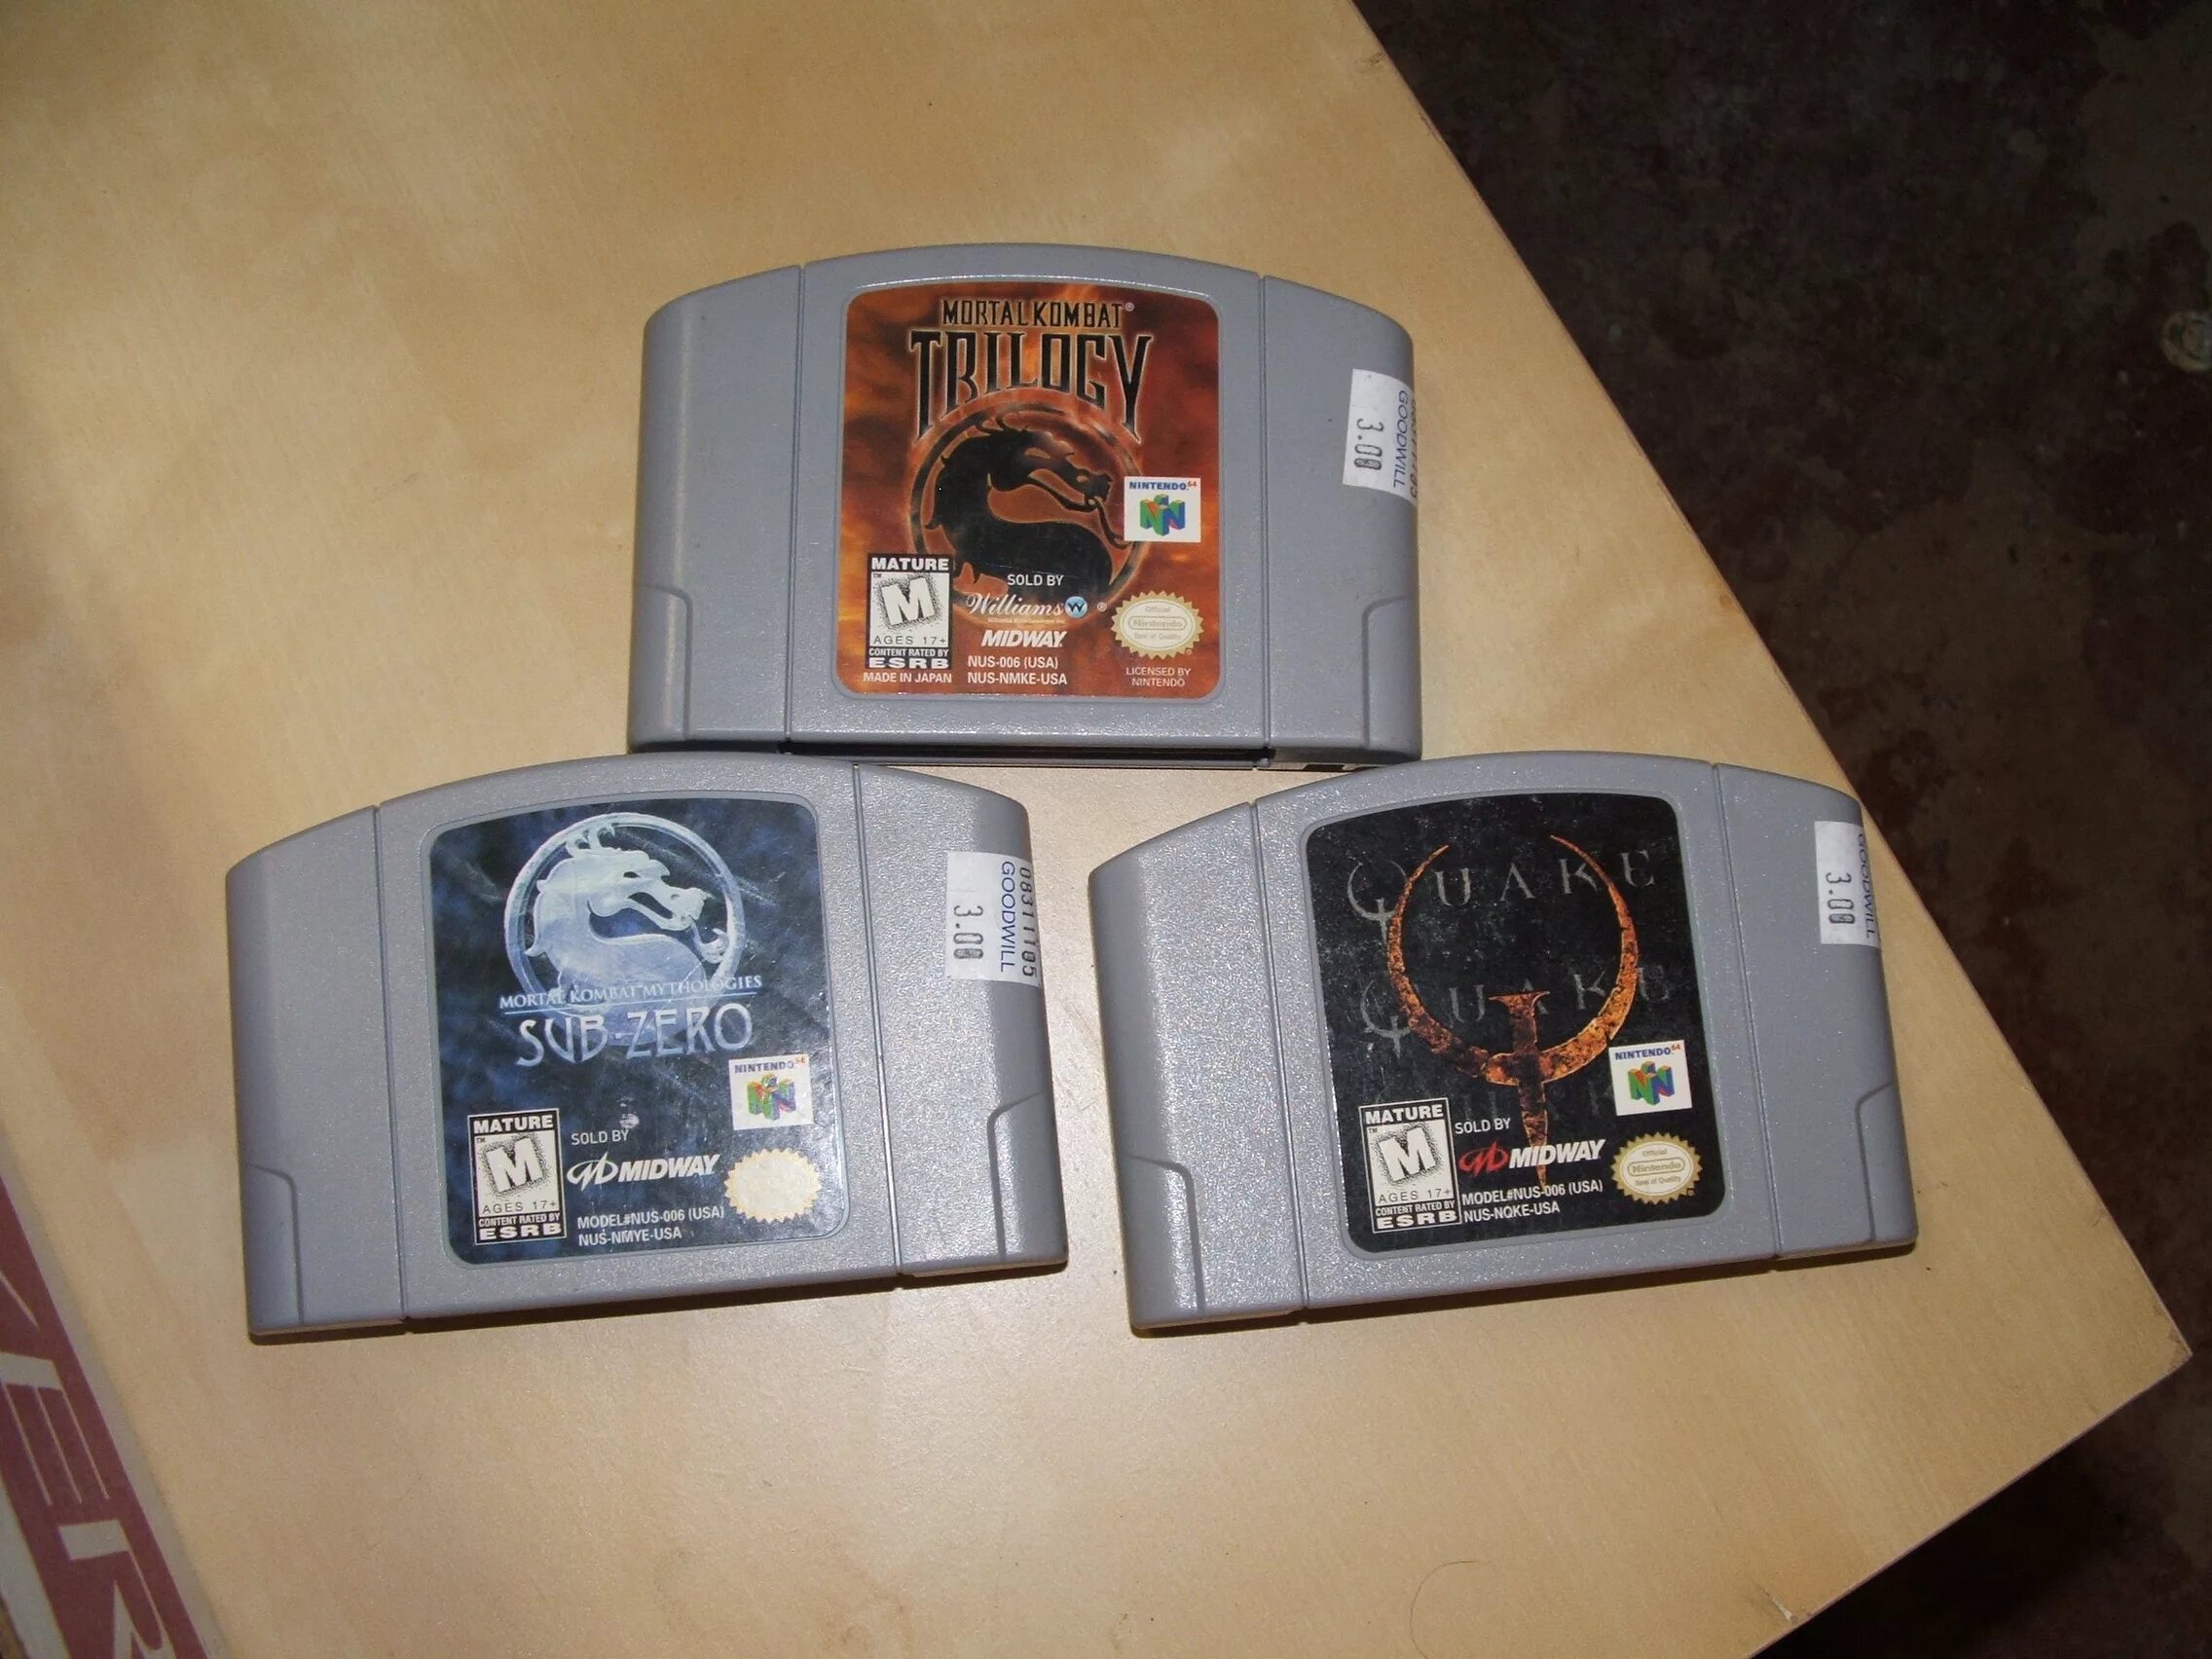 Сега комбо. MK Trilogy Nintendo 64. Mortal Kombat 1 Sega картридж. Sega картриджи мортал комбат. Sega Trilogy Mortal Kombat картридж.